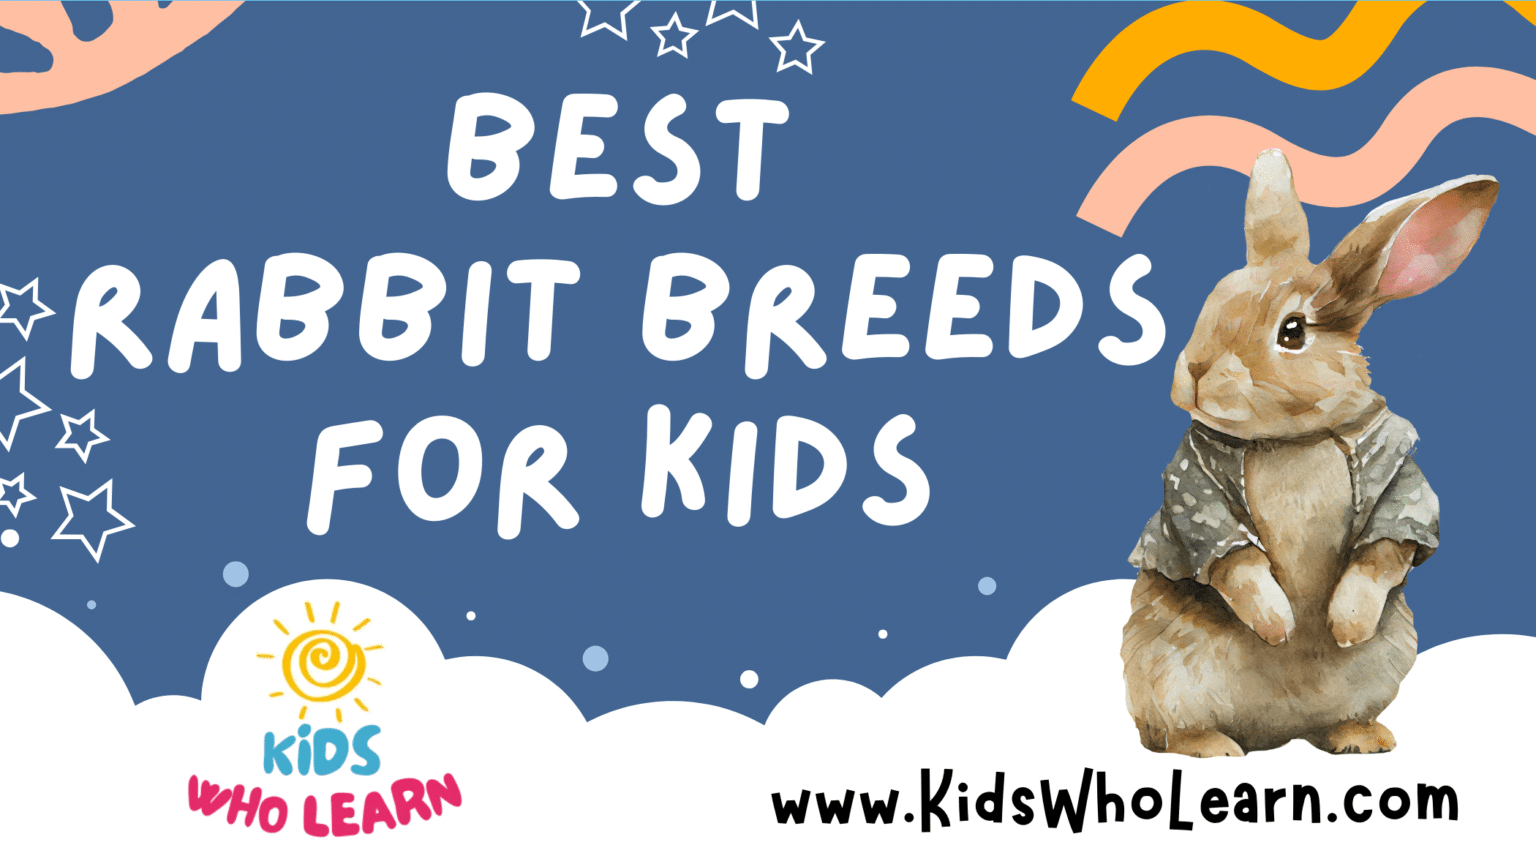 Best Rabbit Breeds For Kids